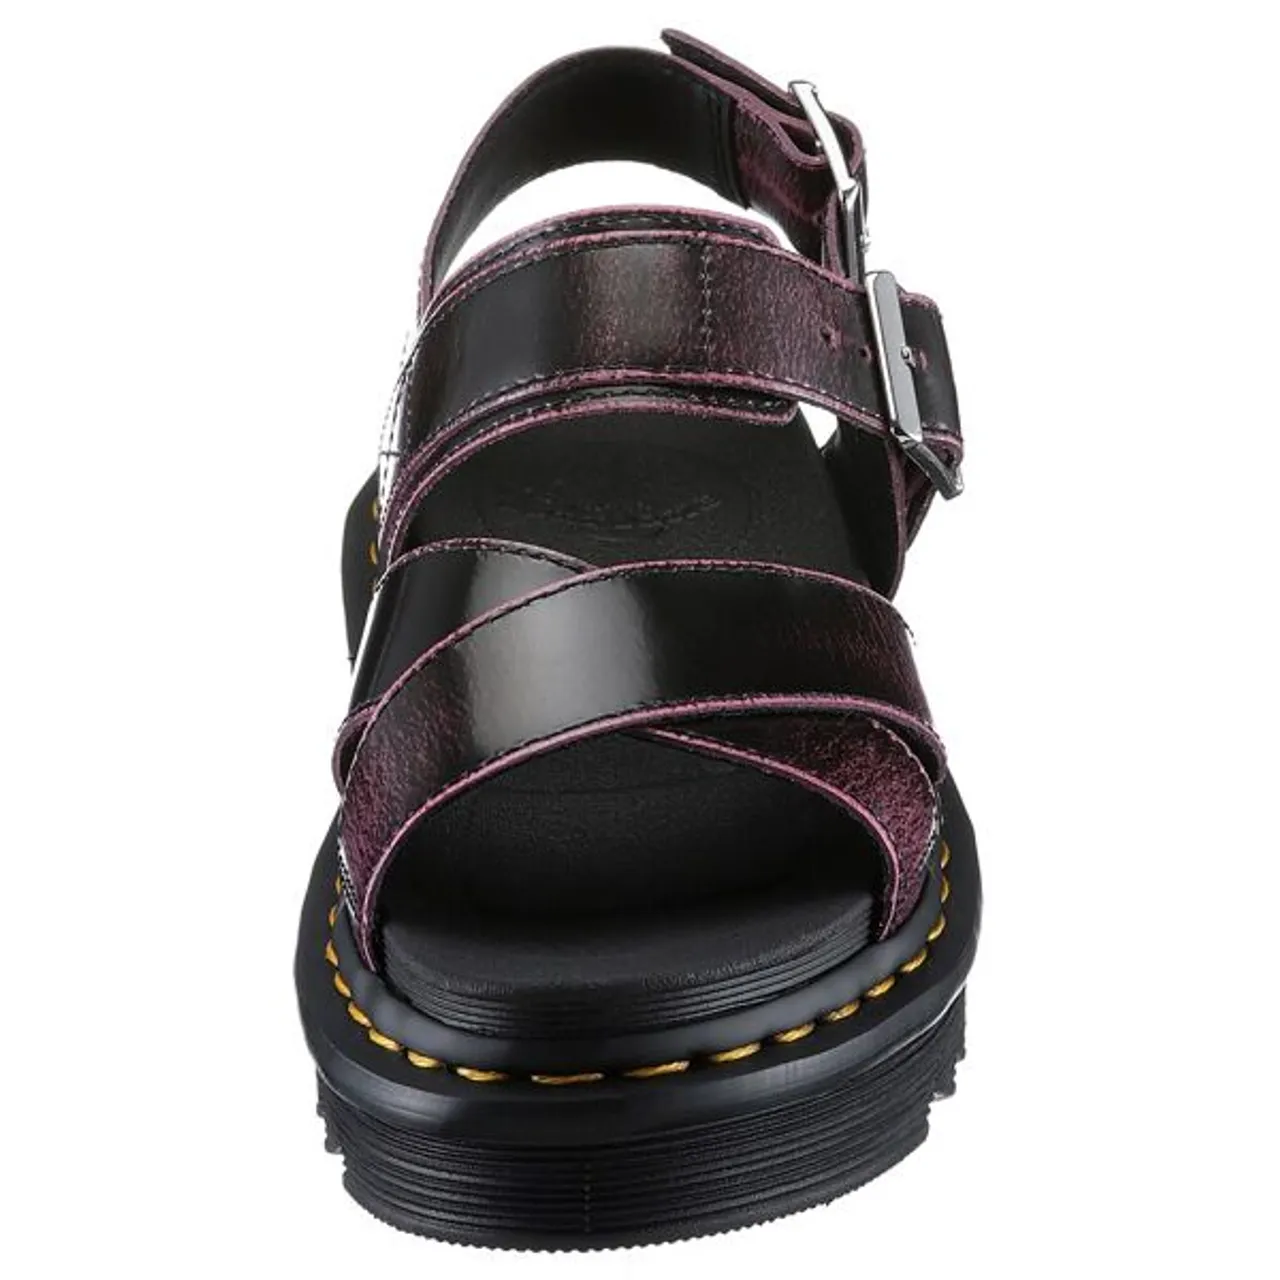 Sandale DR. MARTENS "Voss Li" Gr. 40, schwarz (schwarz, pink) Damen Schuhe Plateau Sandaletten Sommerschuh, Sandalette, Plateauabsatz, mit verstellbar...